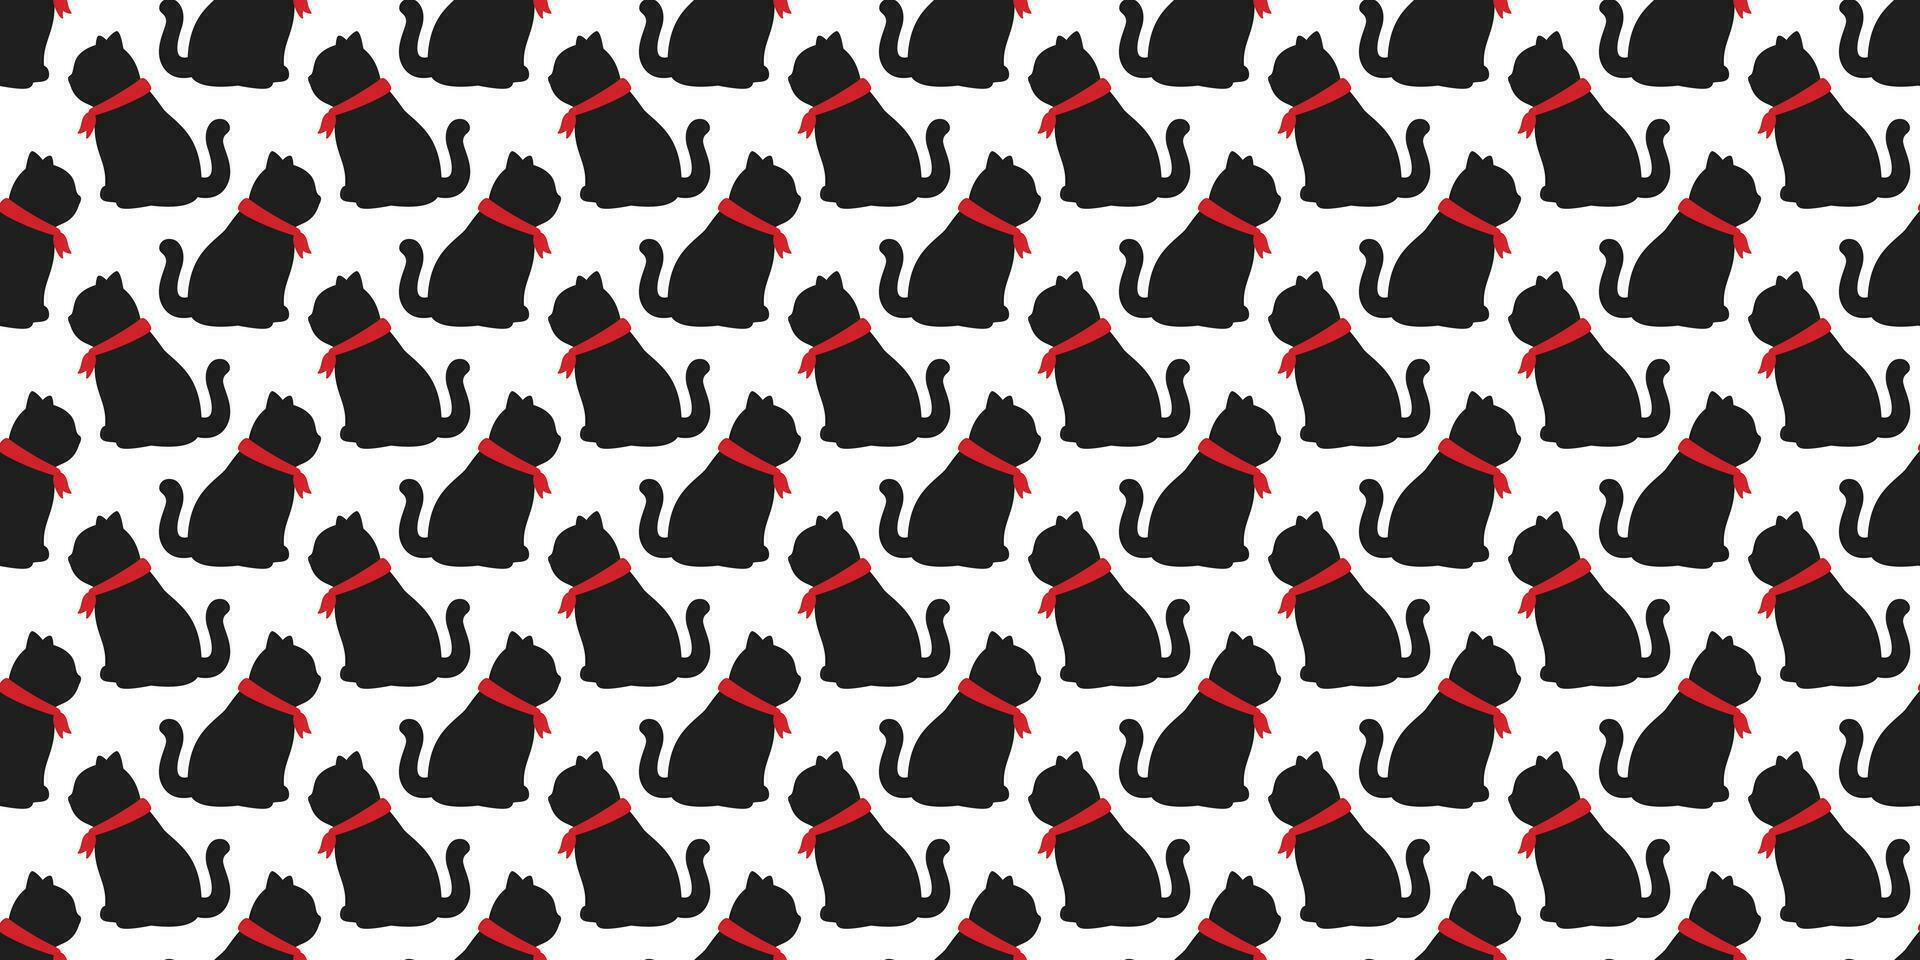 cat seamless pattern valentine heart kitten head vector scarf isolated repeat wallpaper tile background cartoon illustration doodle design